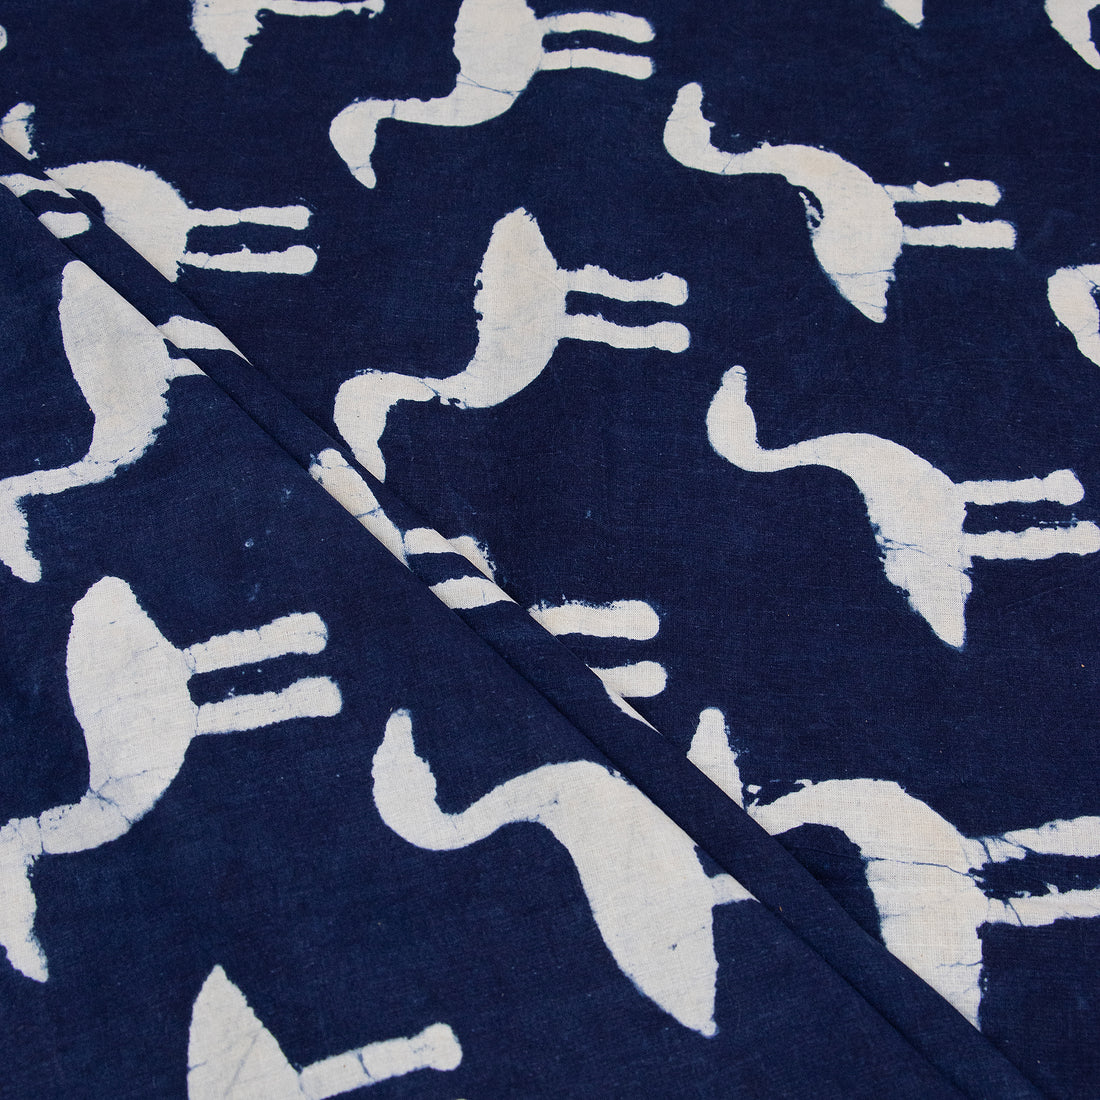 Bird Printed Indigo Cotton Fabric